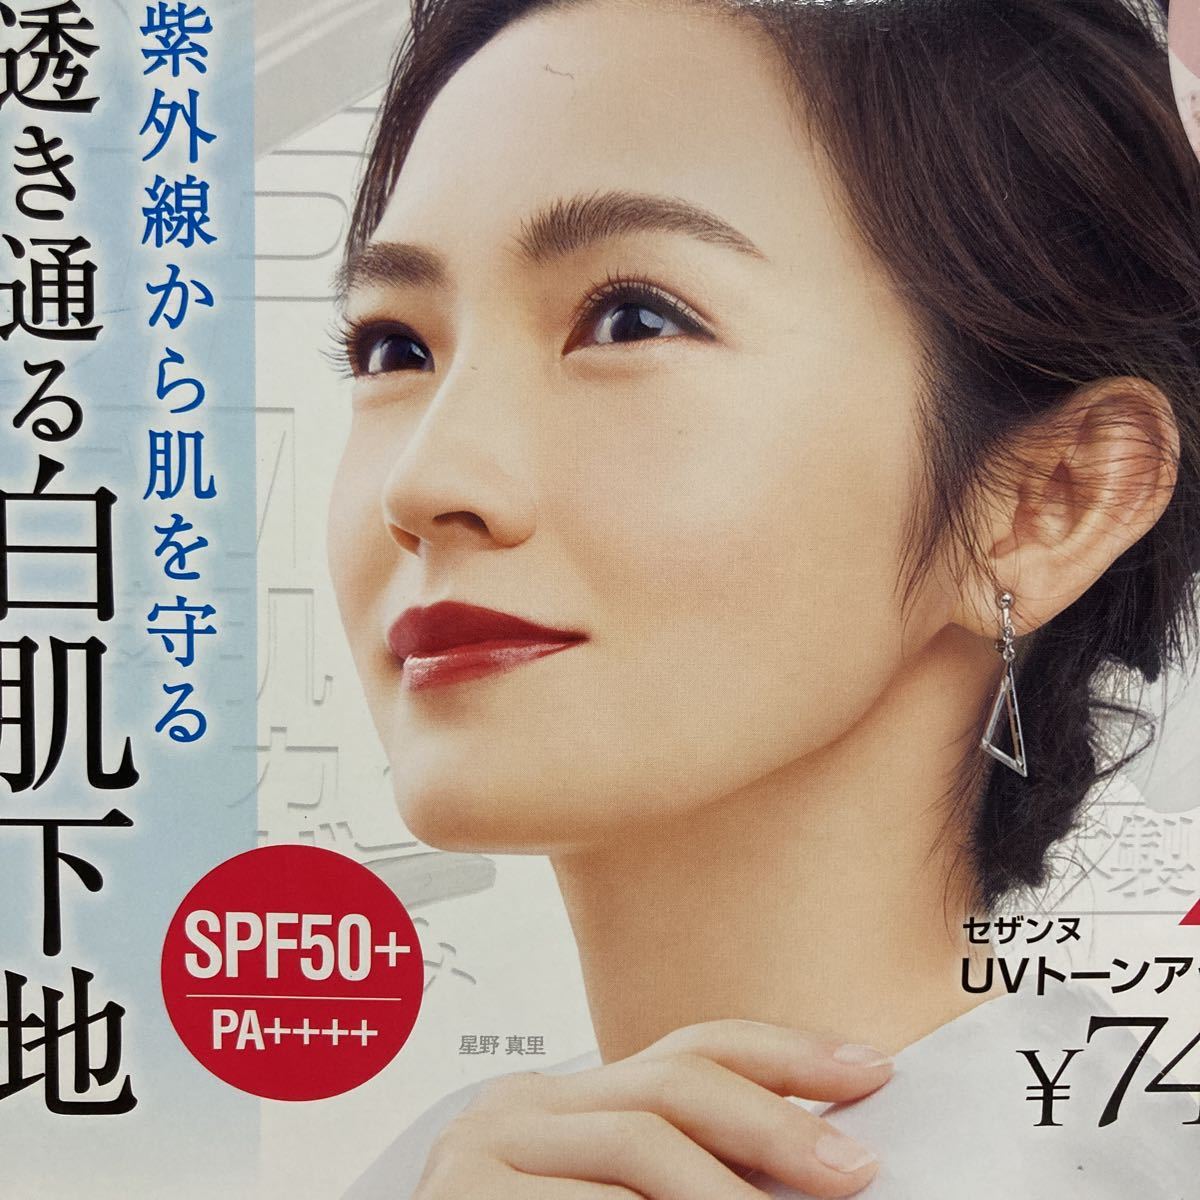  Hoshino Mari se The nn.. pop 2 kind set 17.5cm × 15.5cm|16.5cm × 15cm